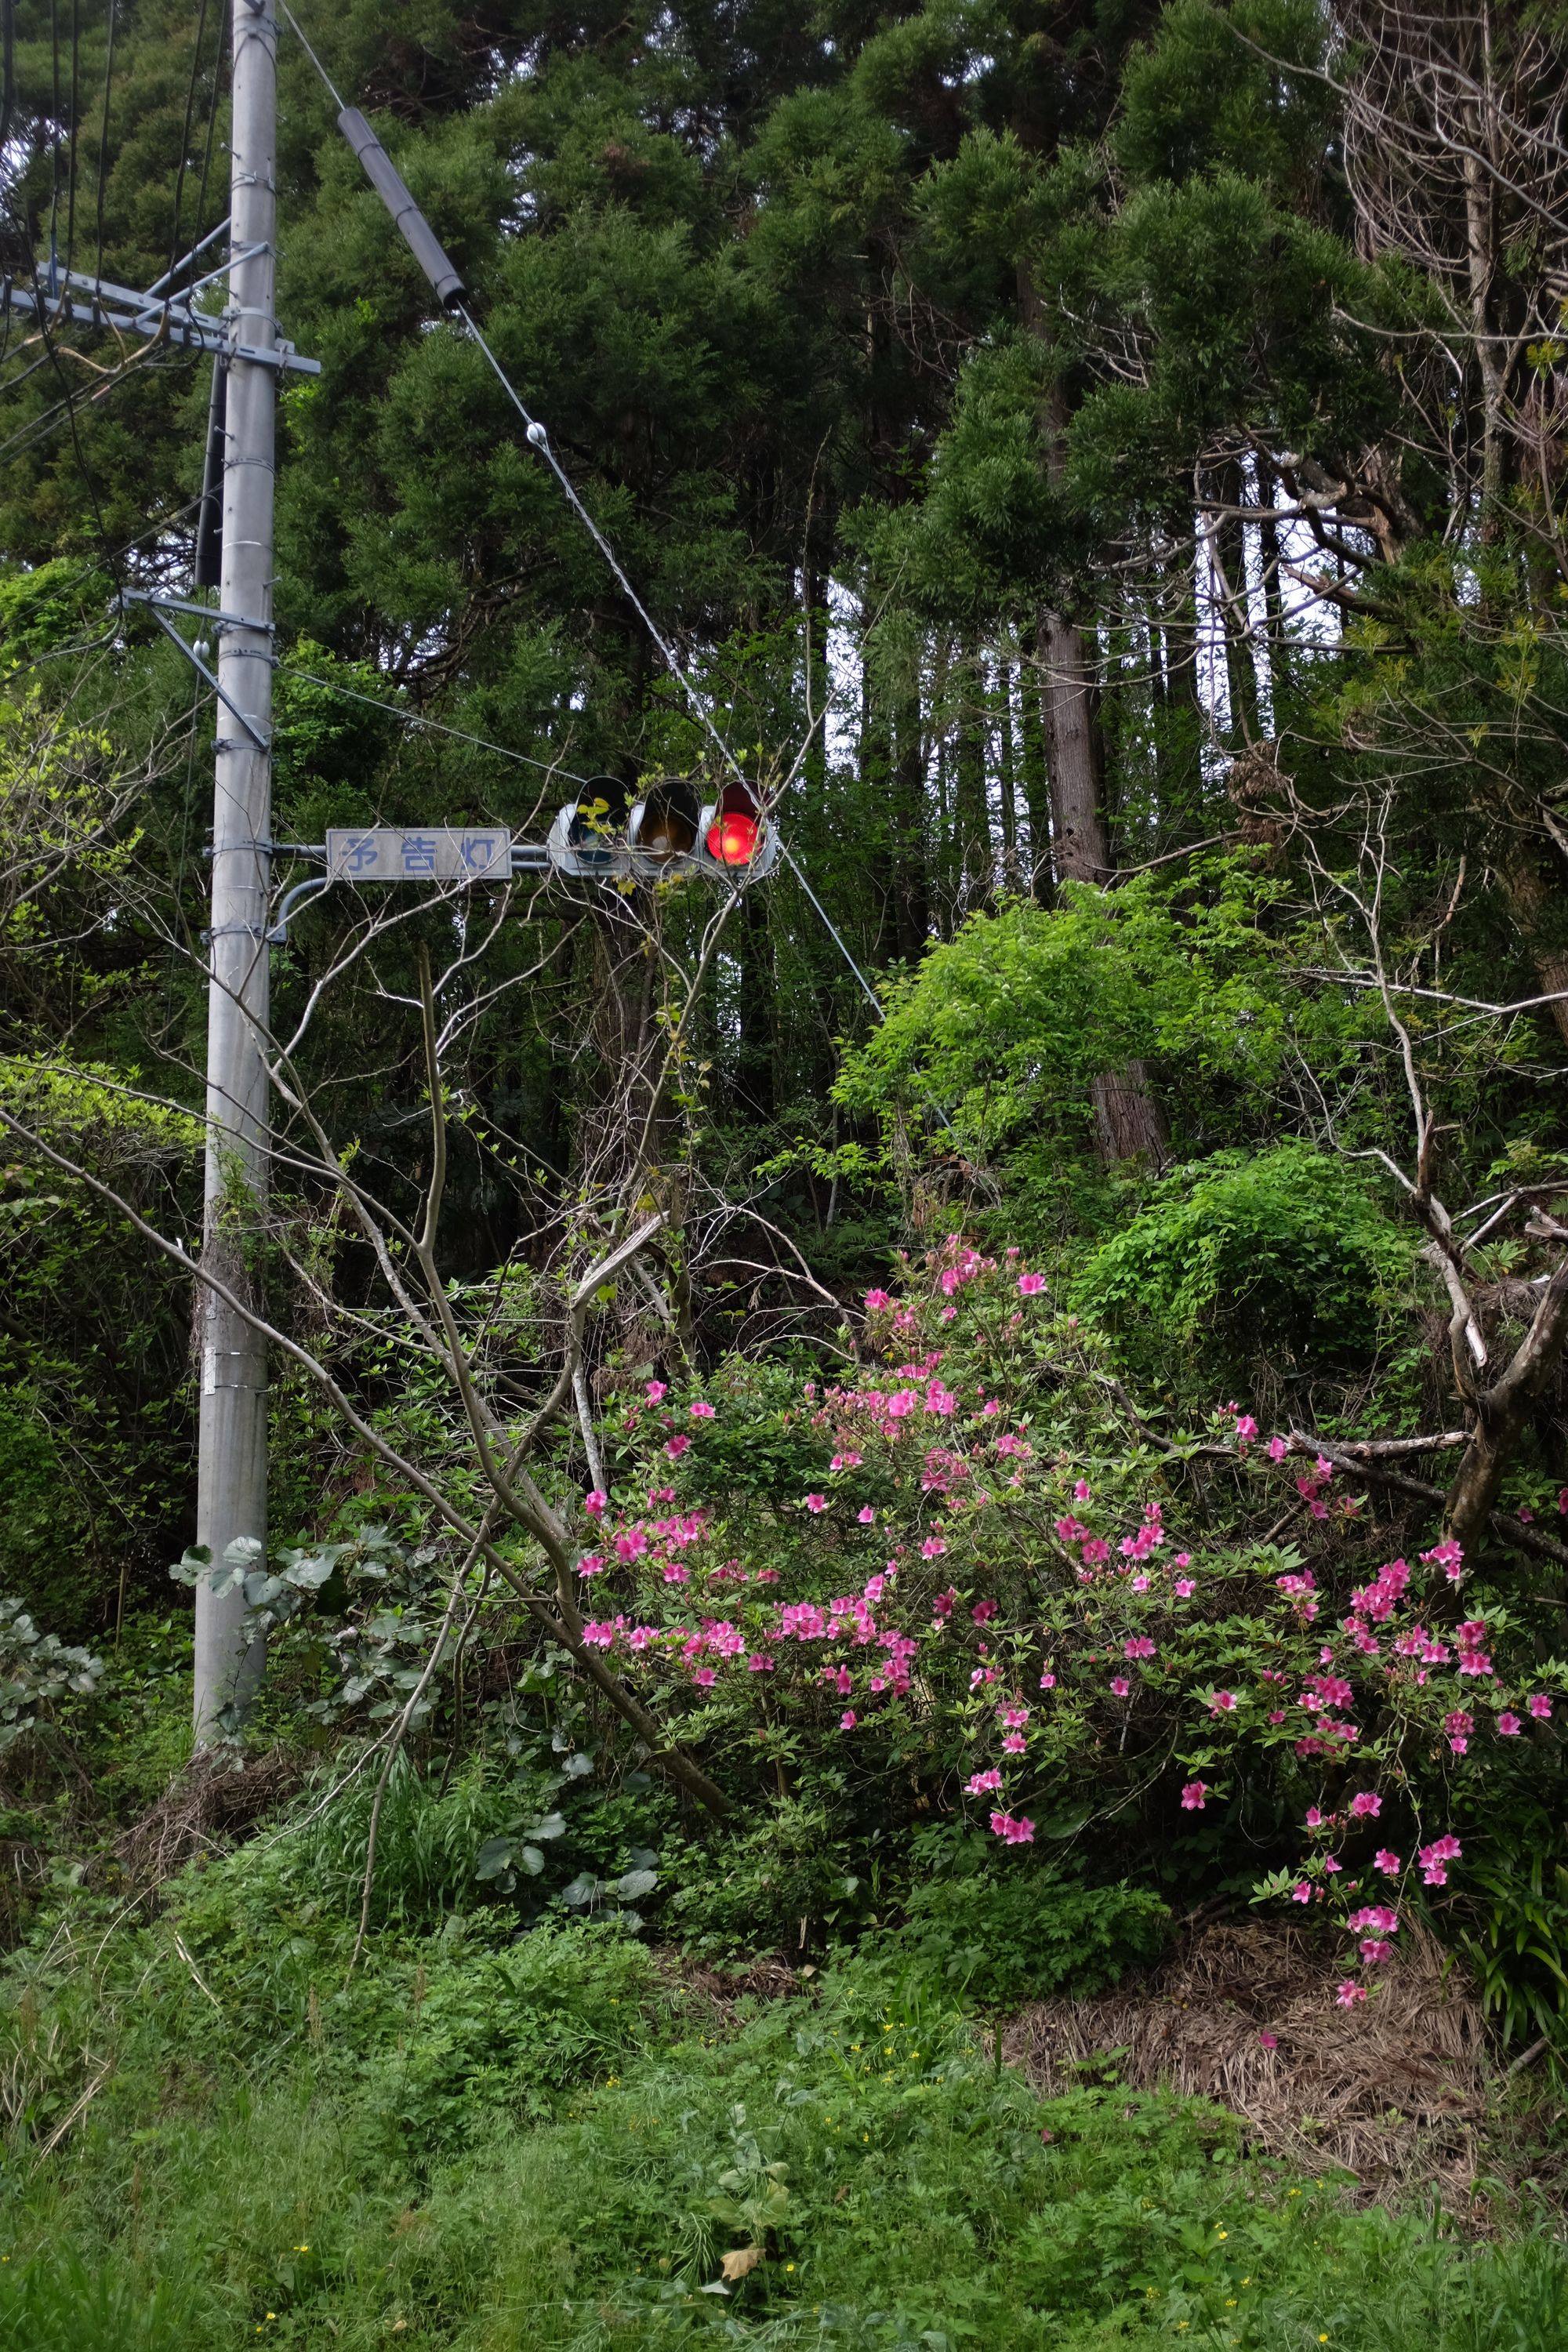 Overgrown traffic light in Tashiro, Kagoshima. Photo: Peter Orosz